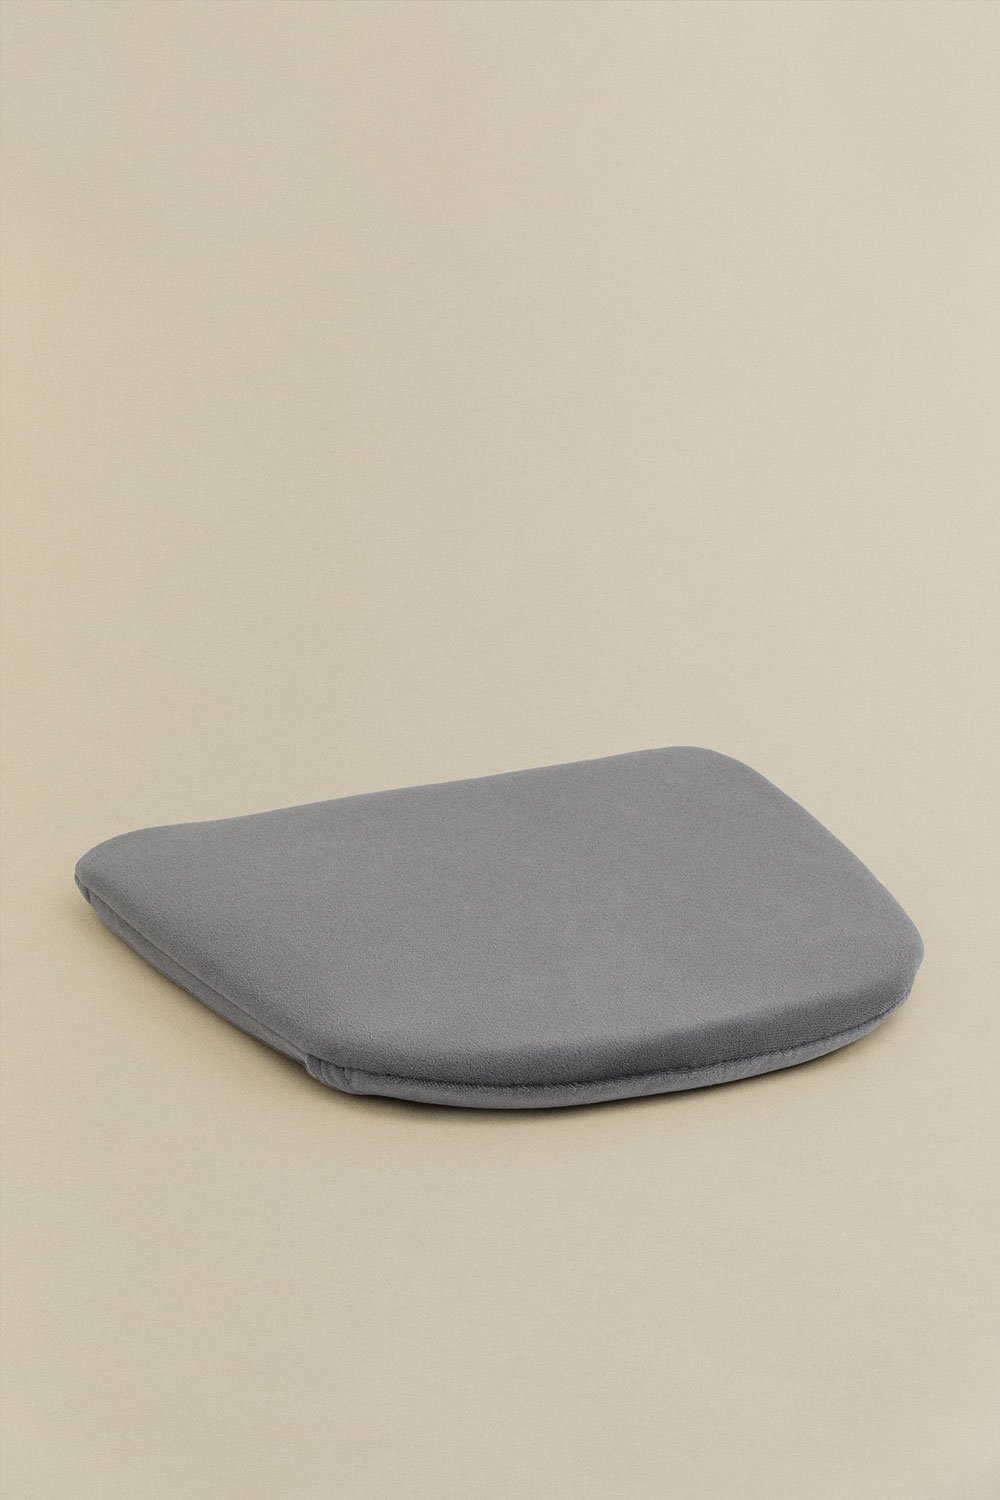 LIX chair velvet cushion, gallery image 1